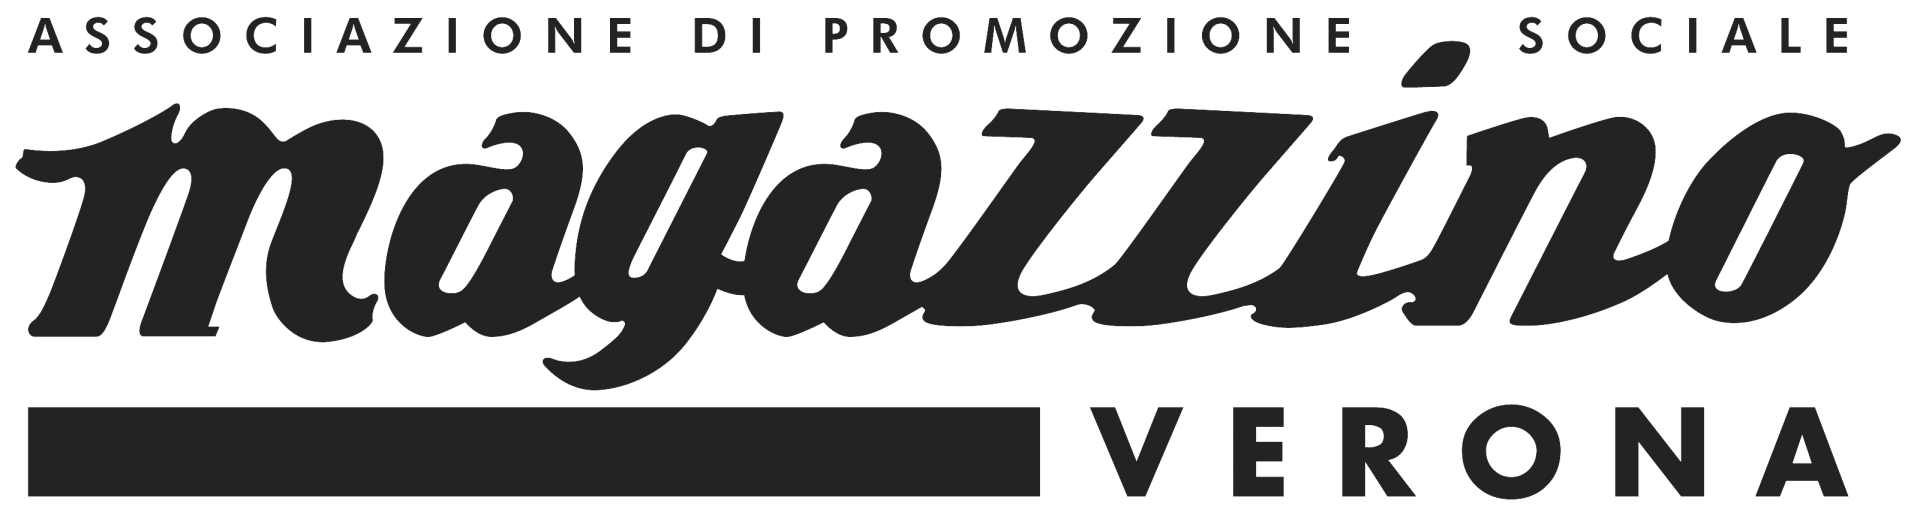 magazzino-verona-logo-ok.png